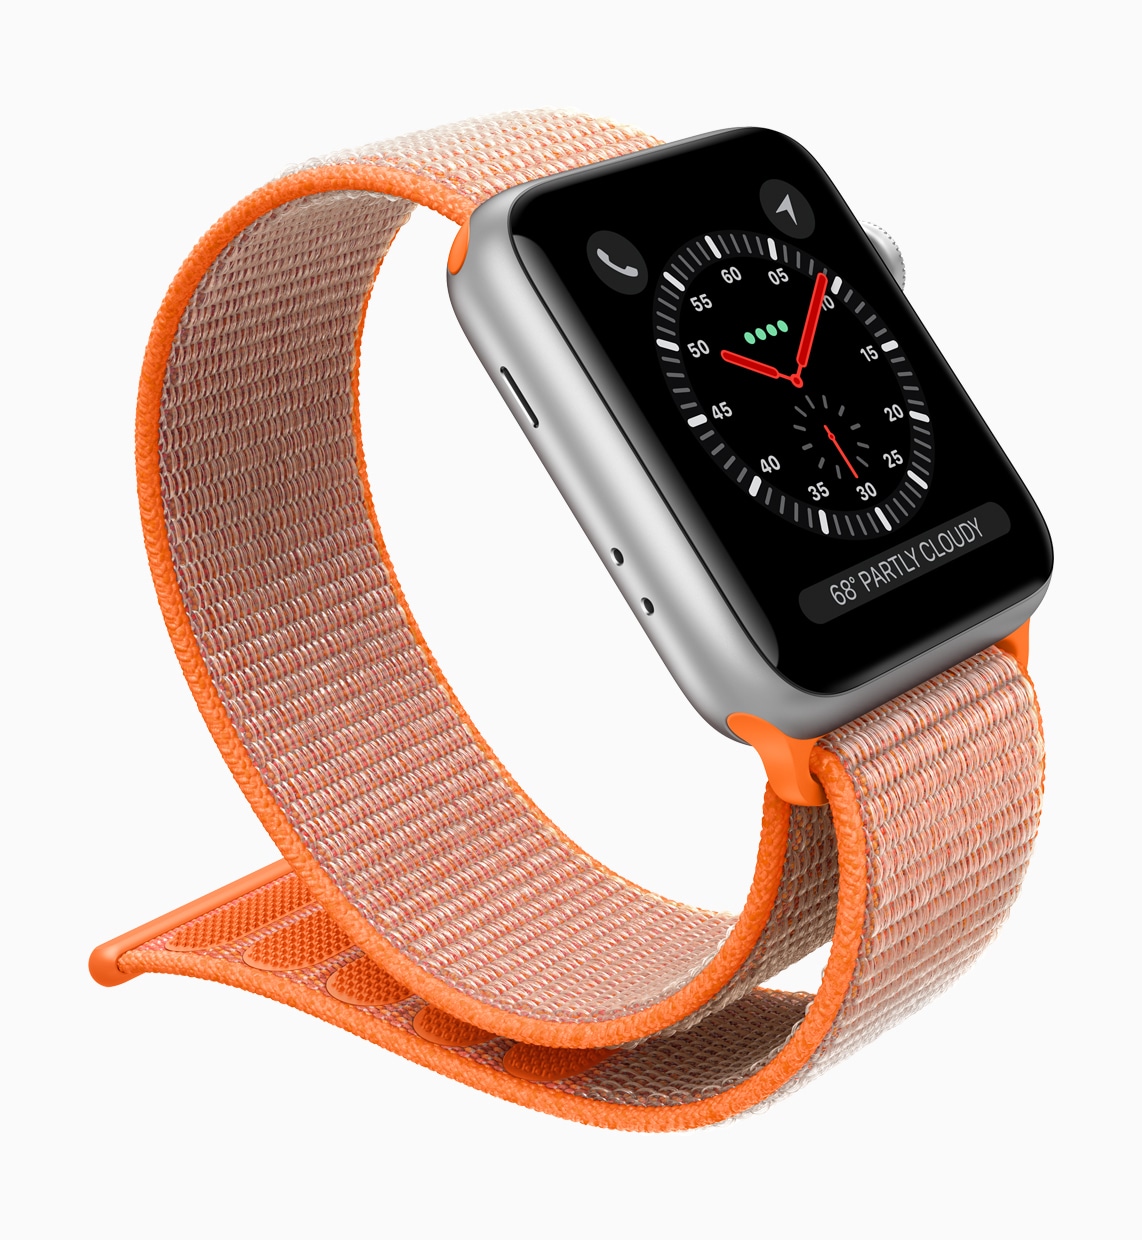 Apple Watch Series 3 com pulseira esportiva laranja